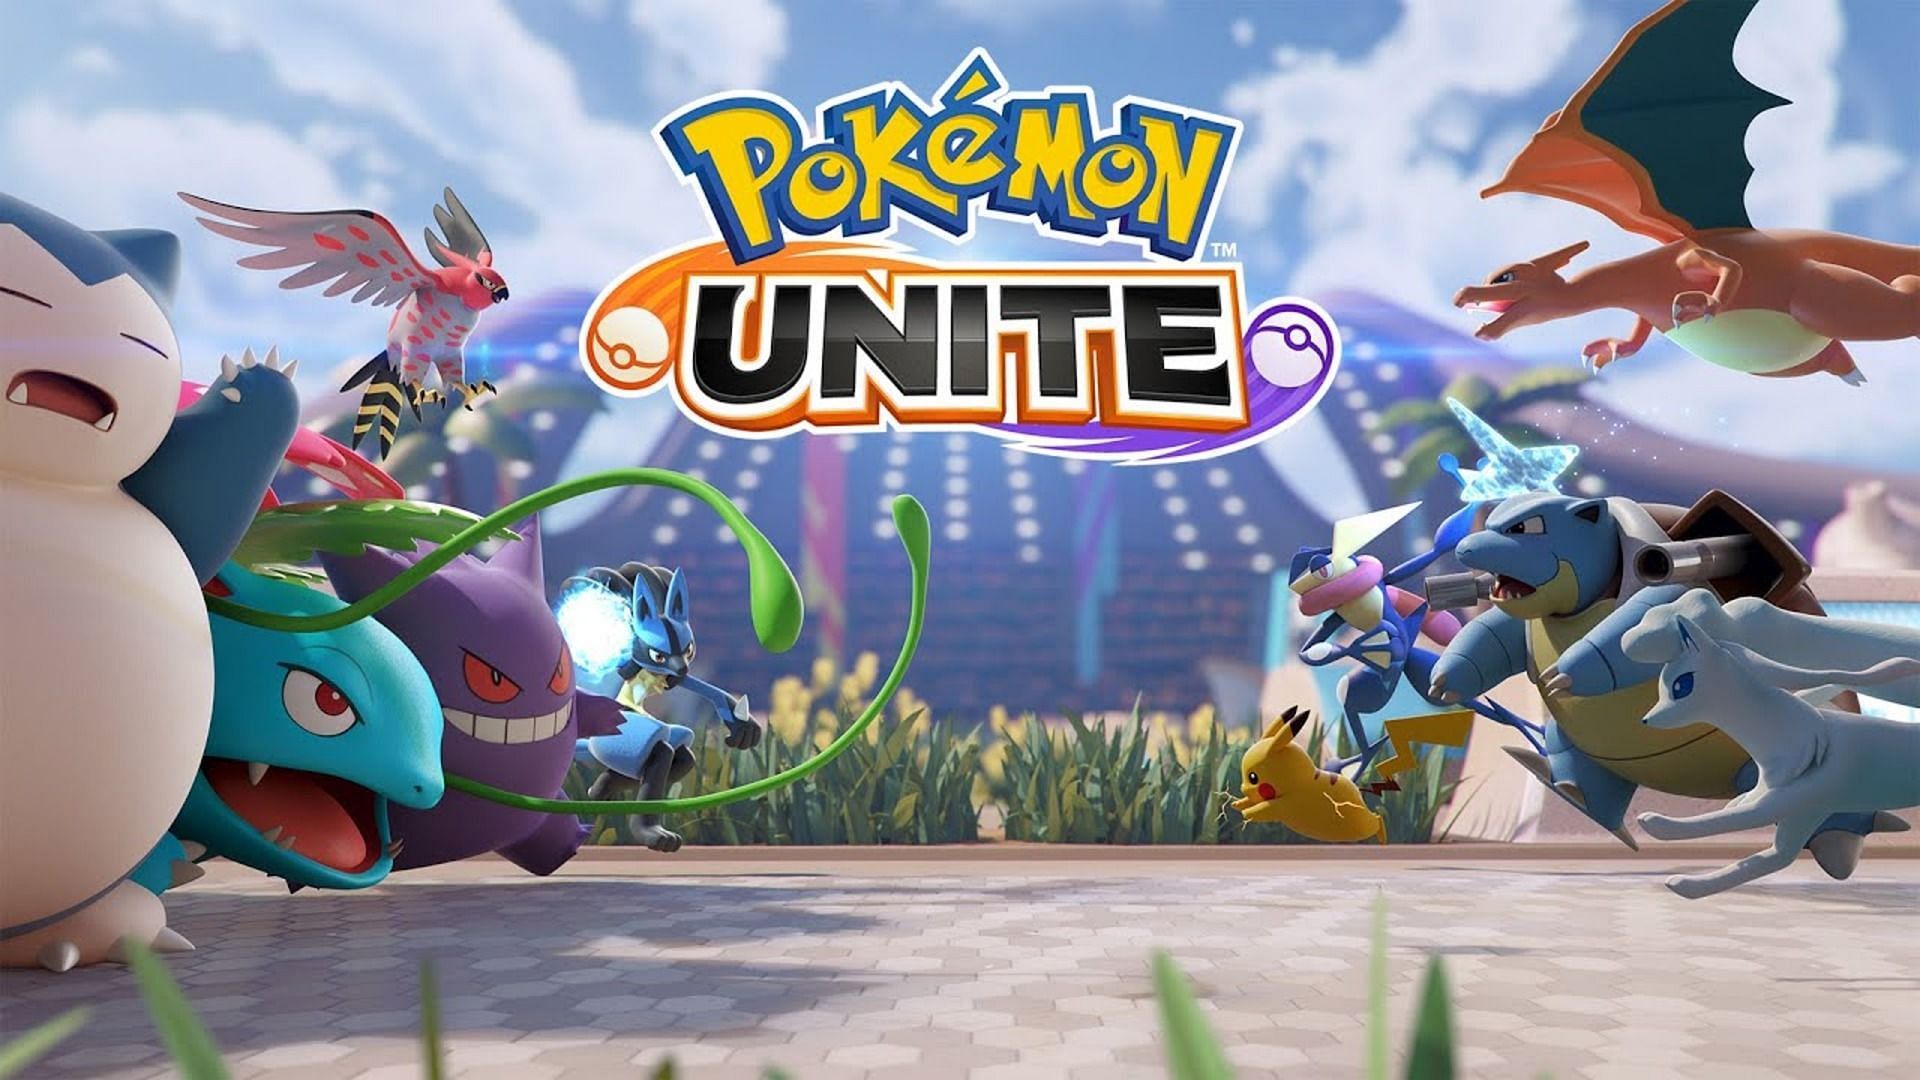 Official artwork for Pokemon UNITE (Image via The Pokemon Company)